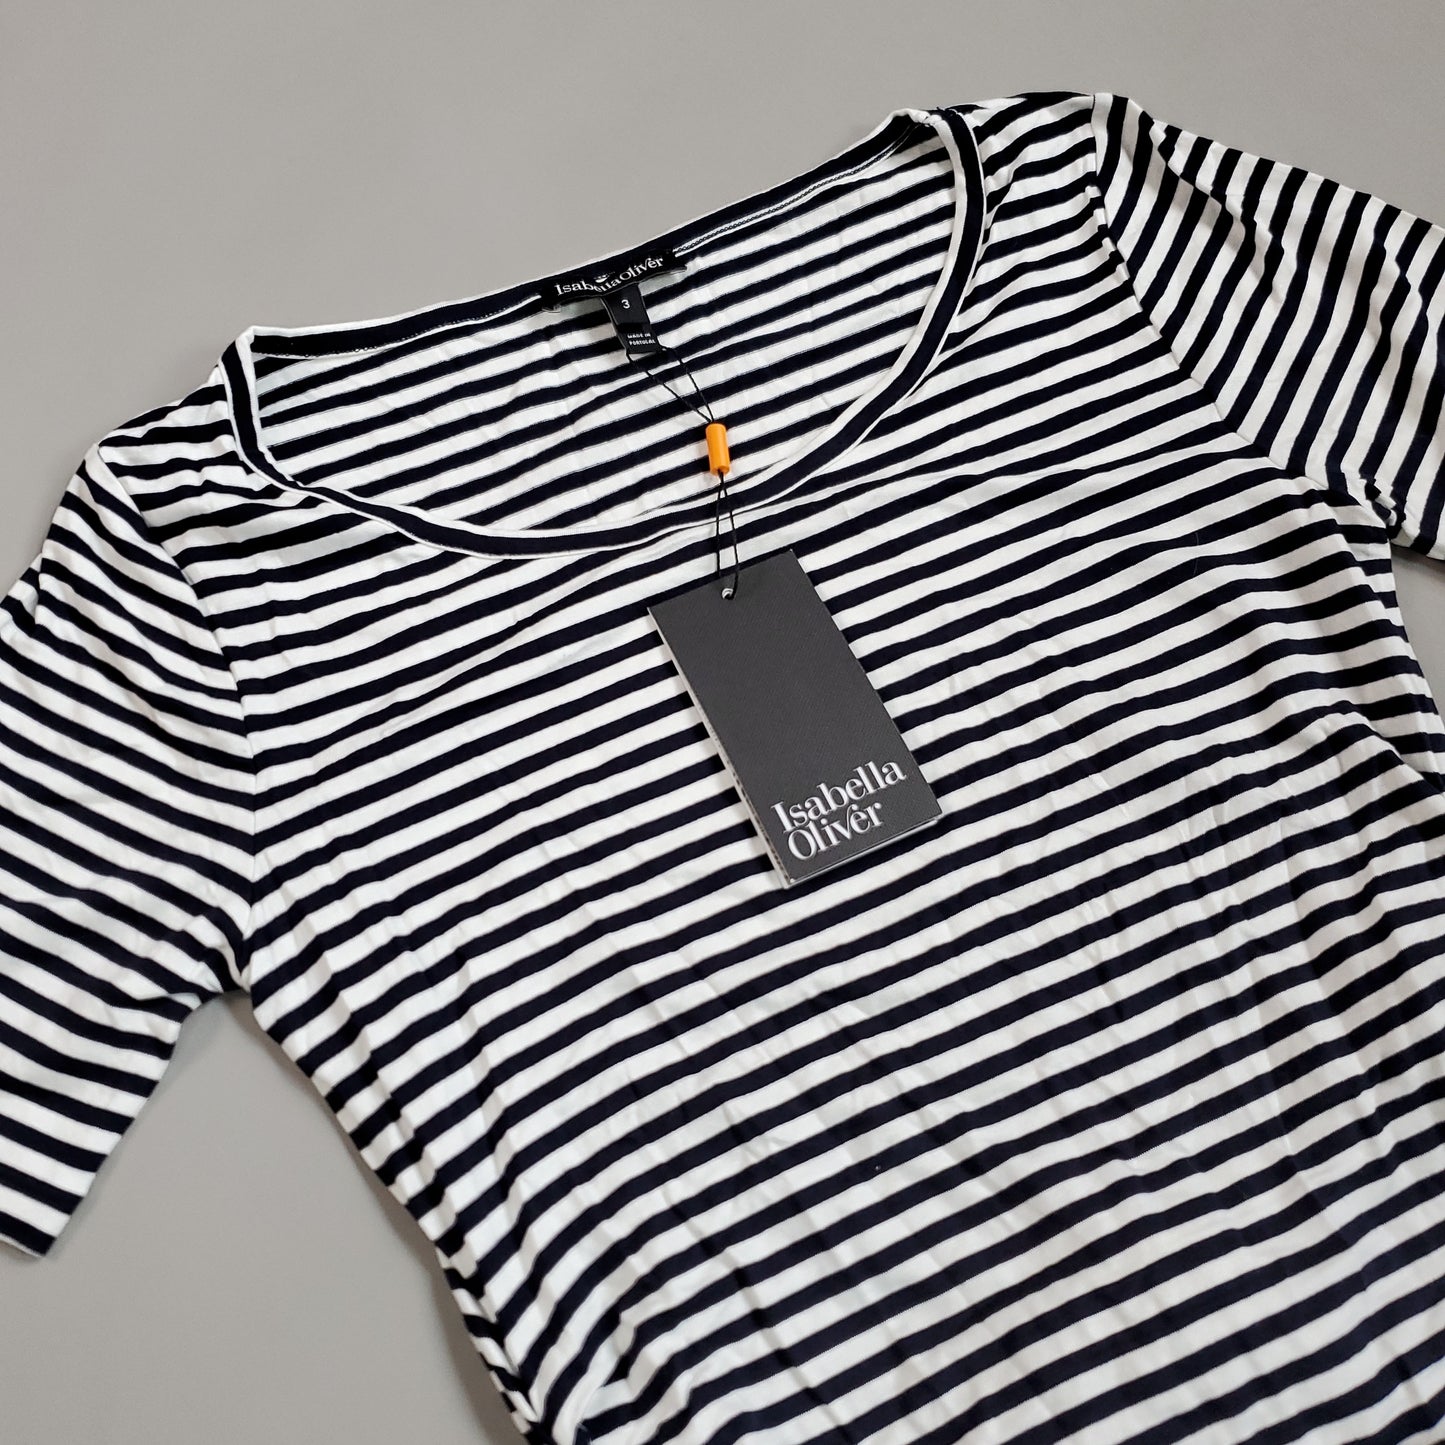 ISABELLA OLIVER Jenna Maternity Striped T-Shirt Dress Navy & Off White Women's Sz 3 (New)